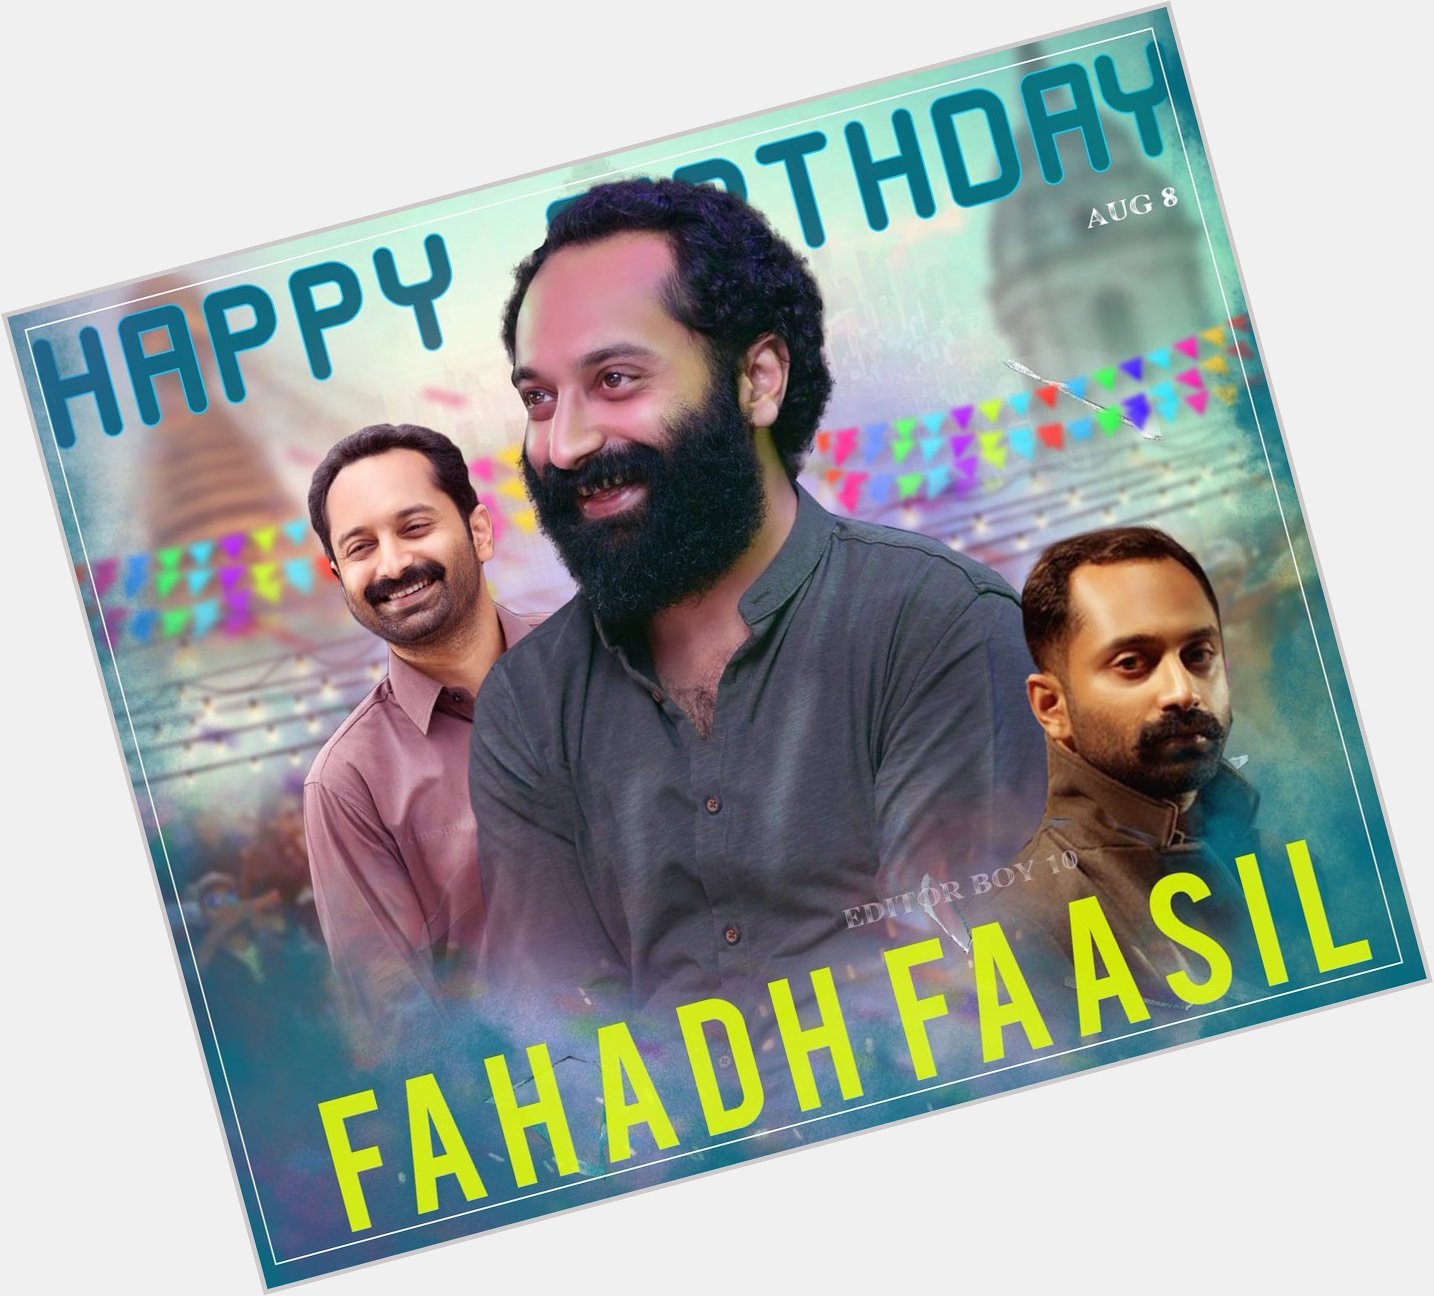 Happy Birthday fahadh faasil 